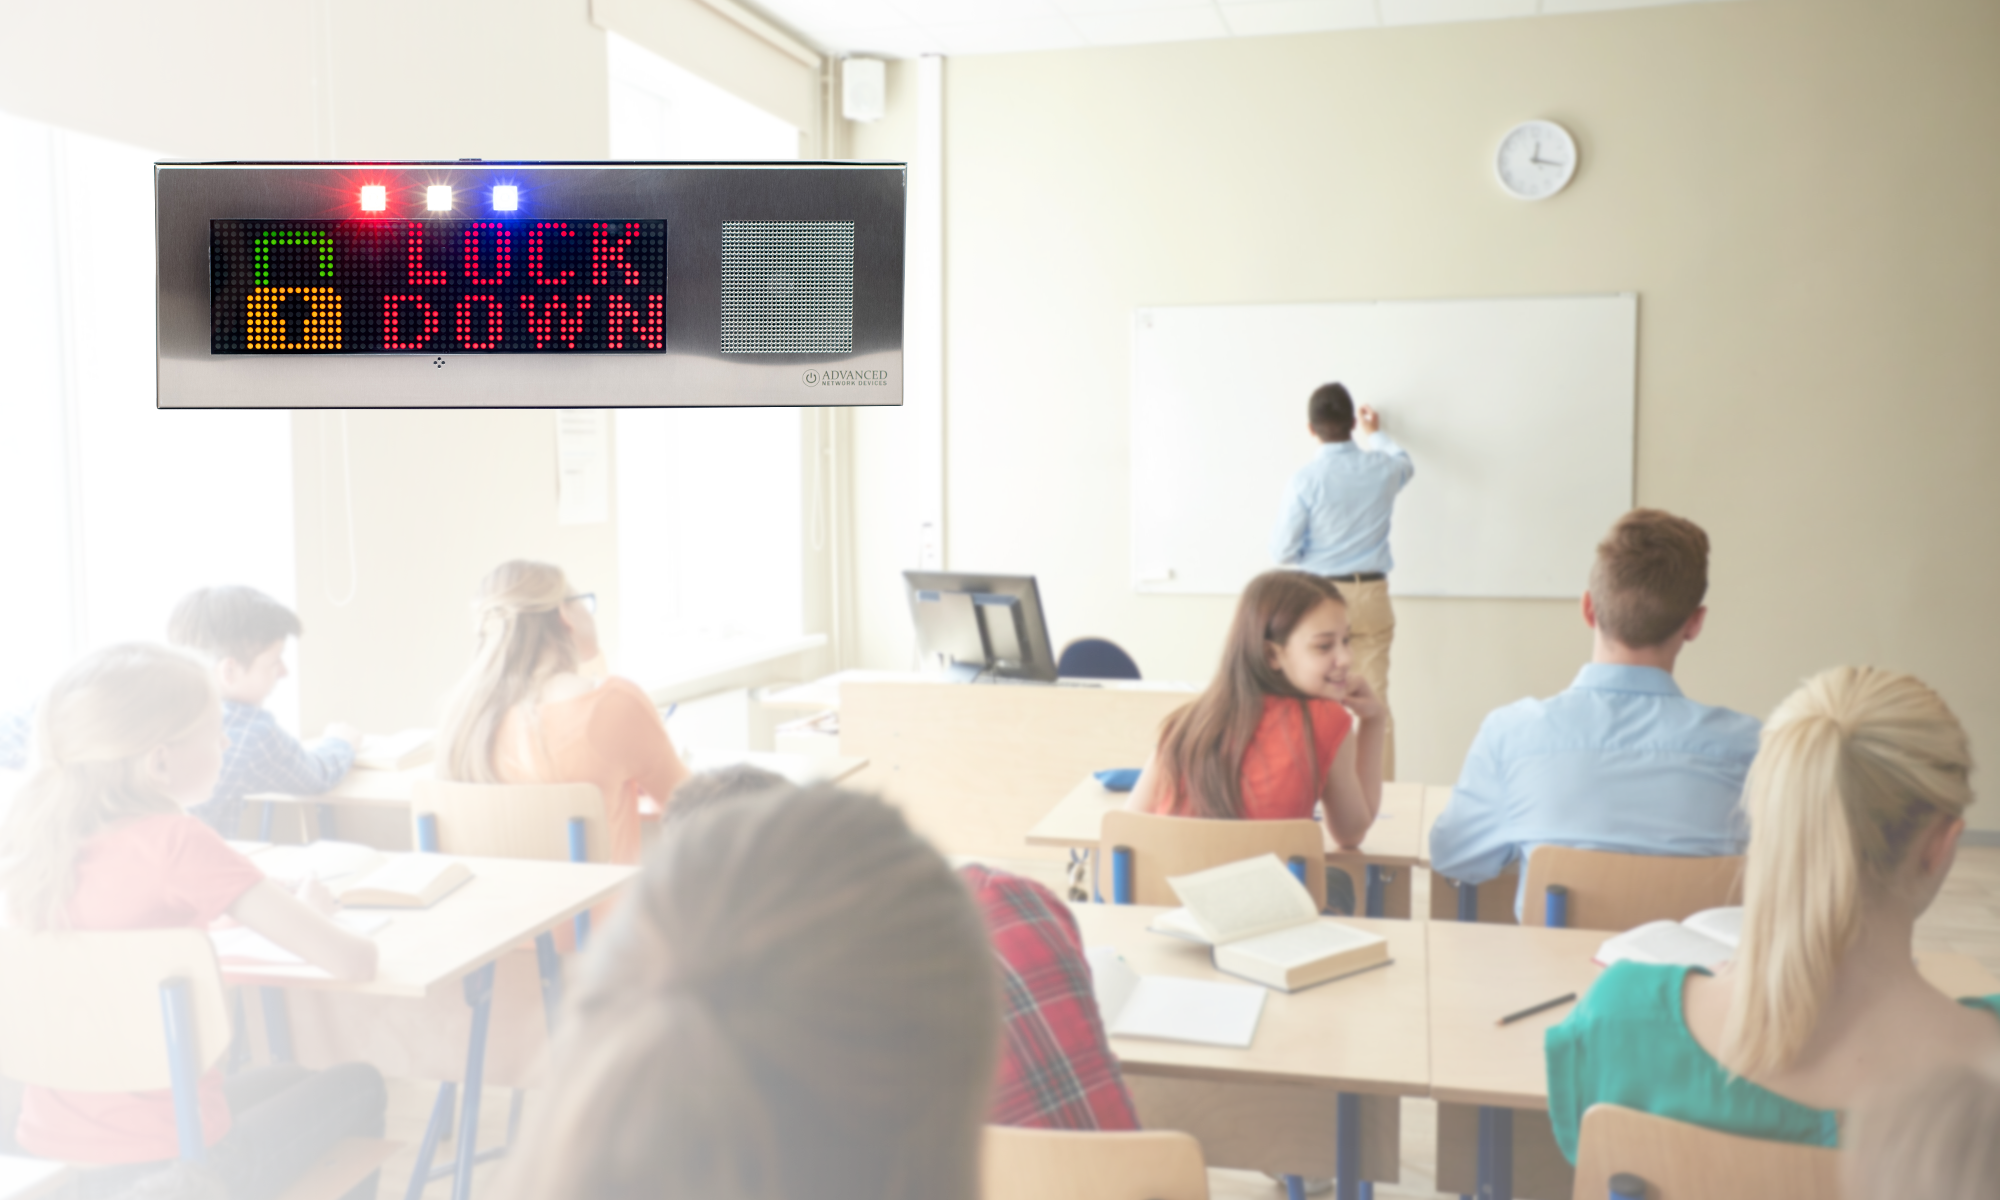 building-lockdown-alert-on-small-ip-display-in-classroom